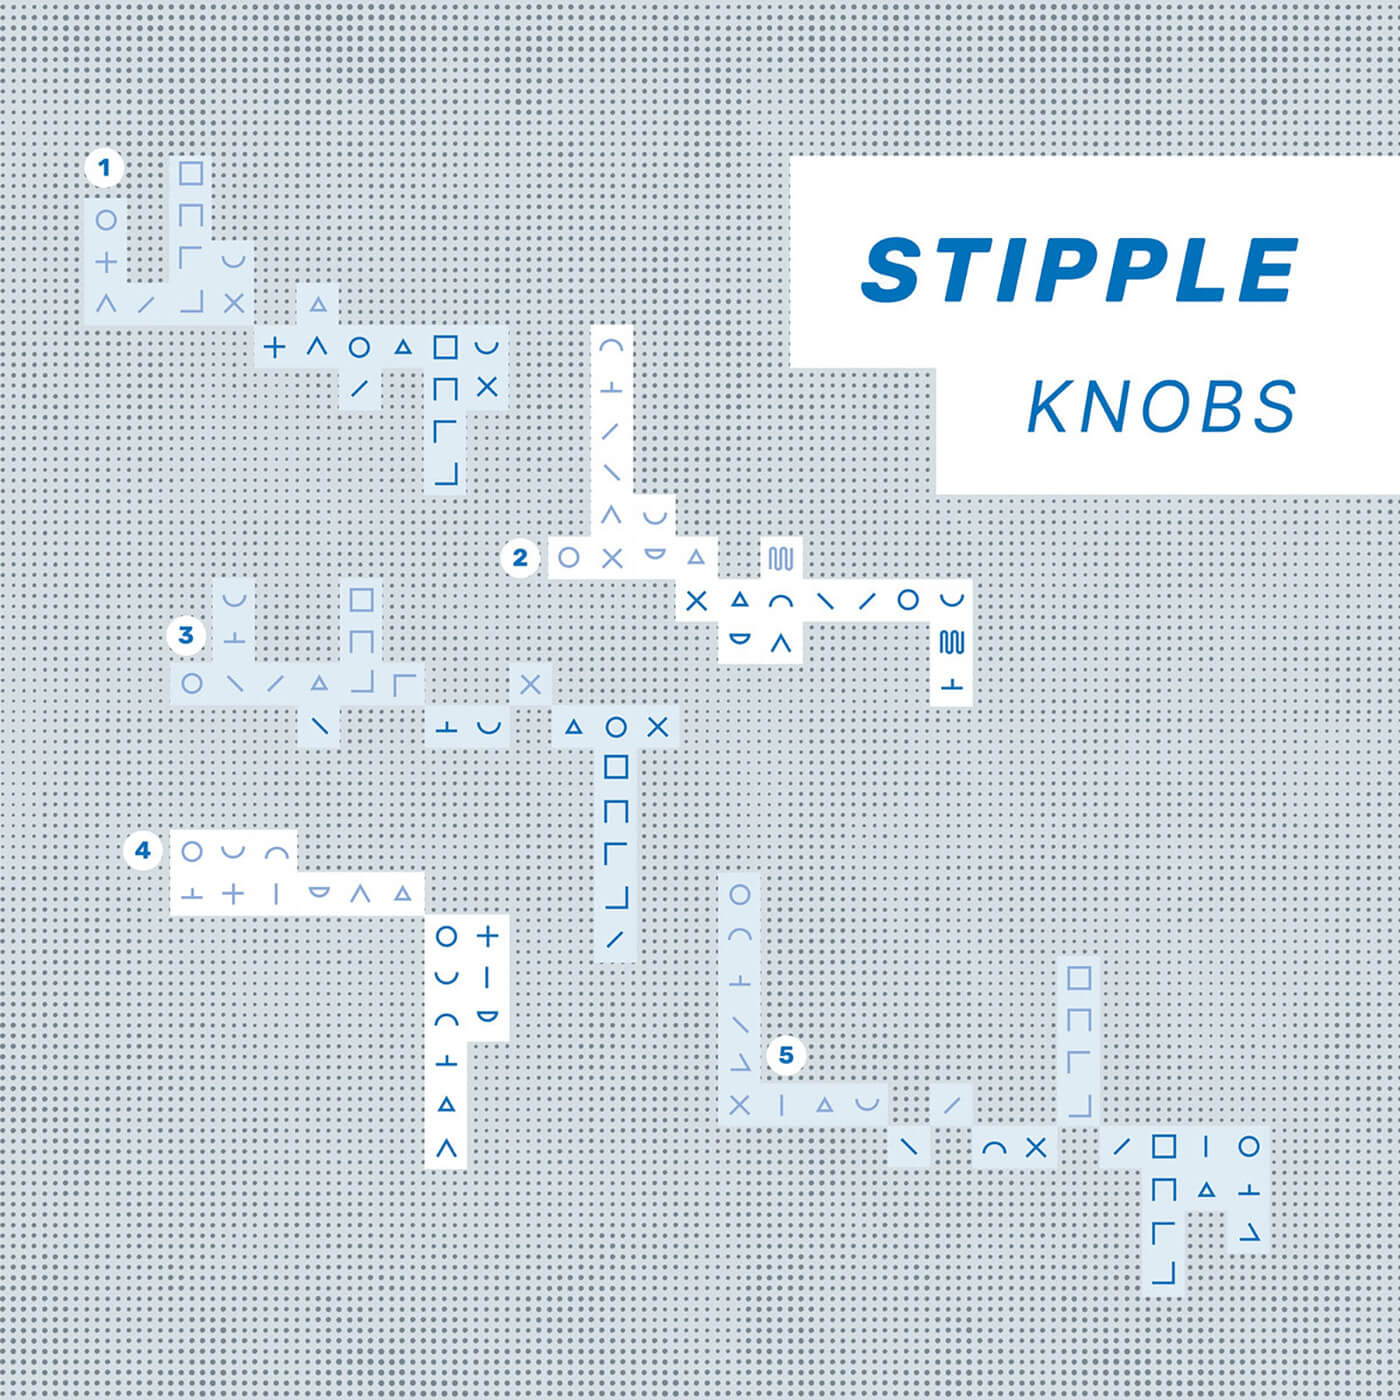 Knobs - Stipple